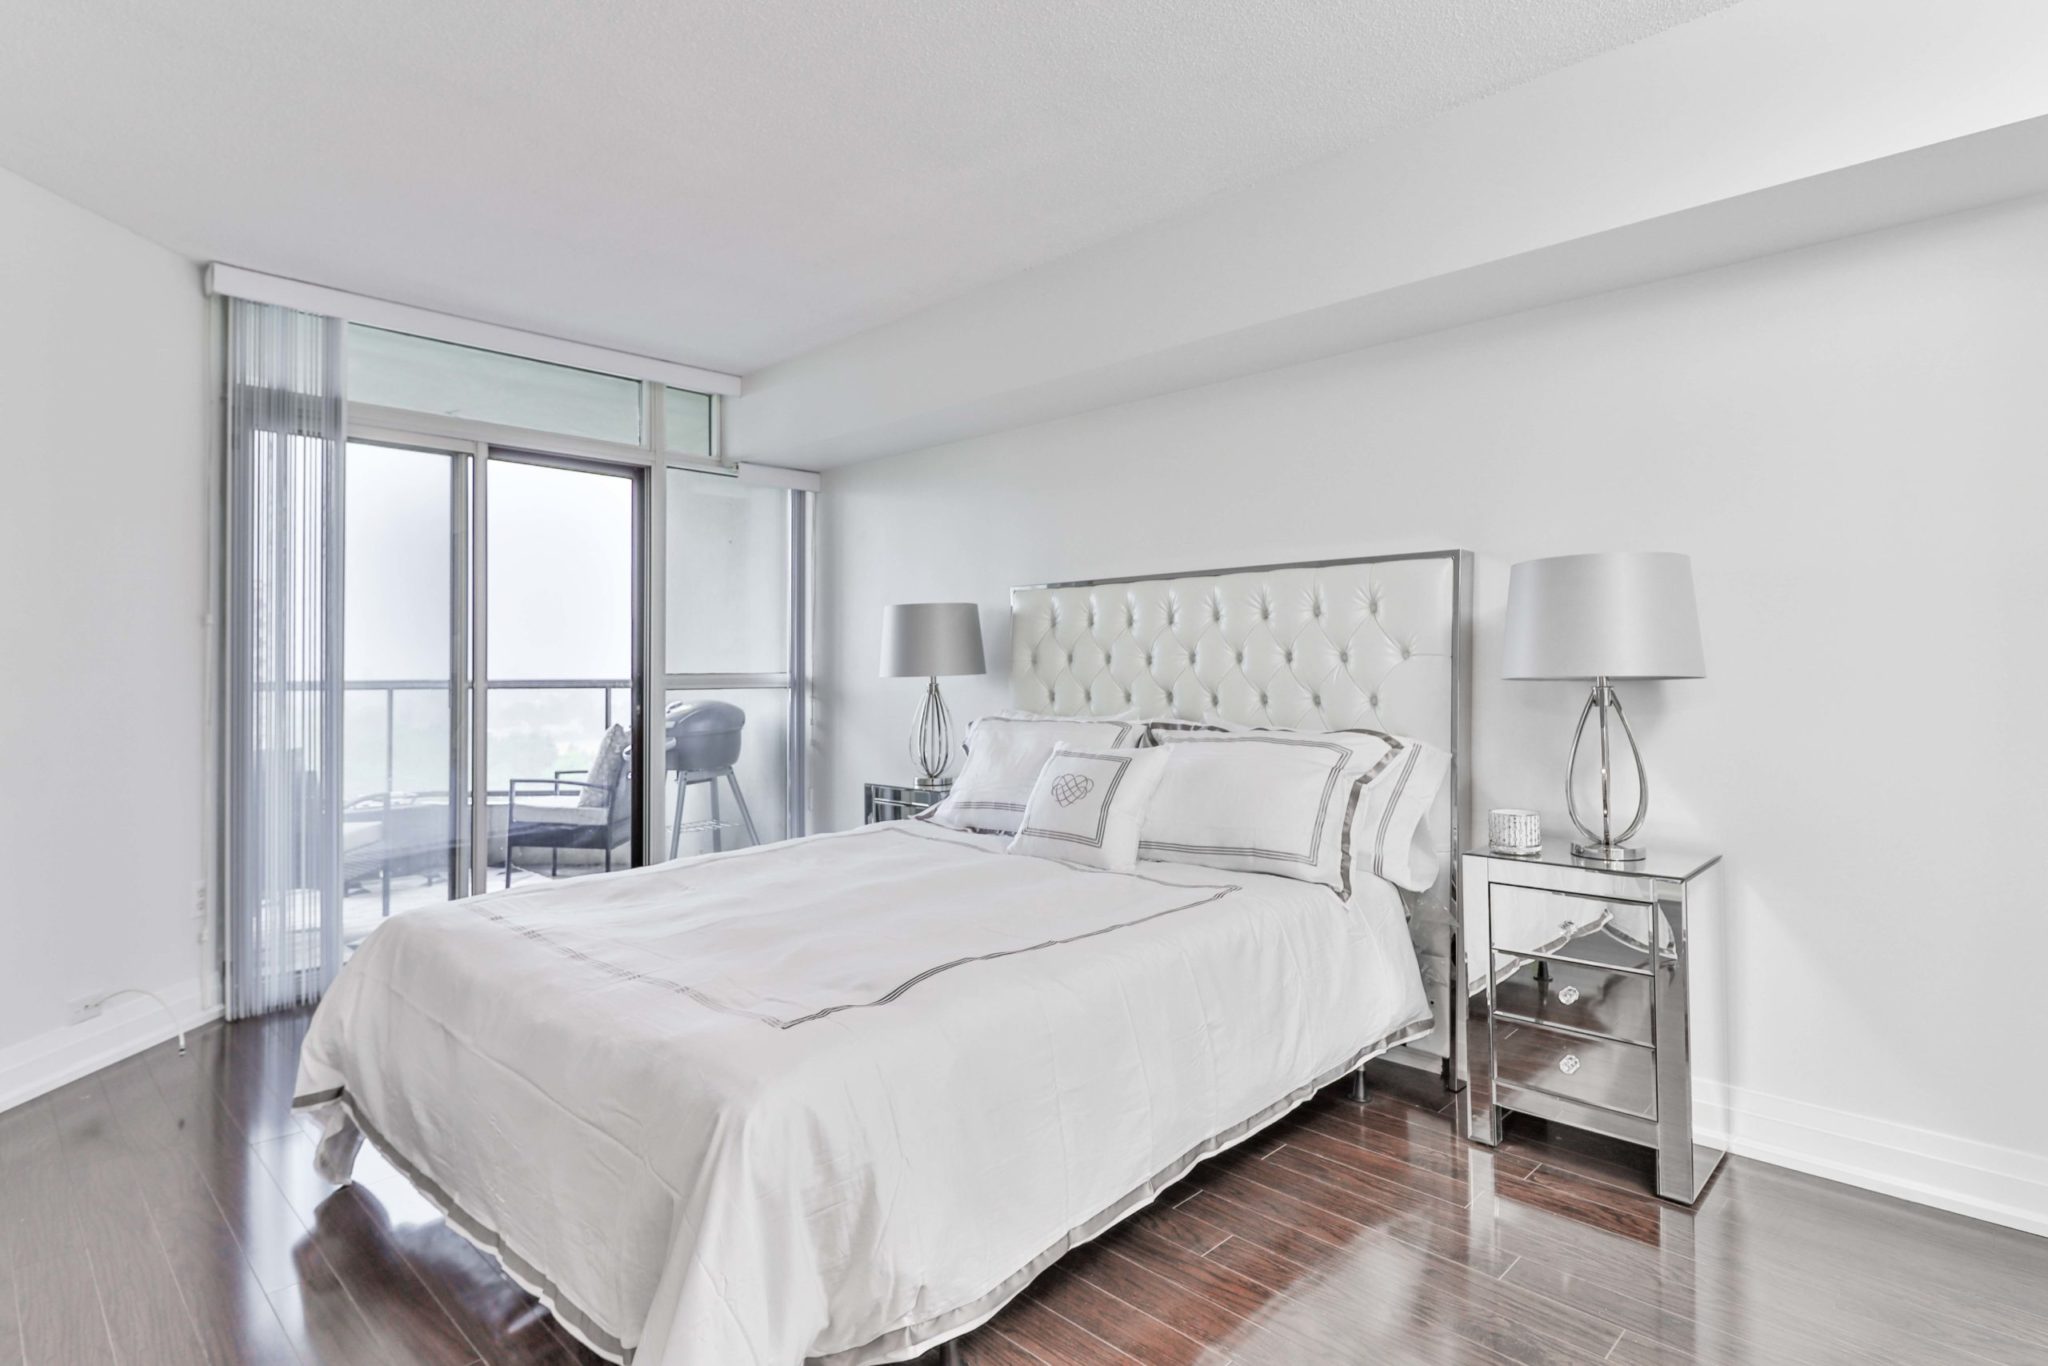 Master bedroom with walk-out balcony and shiny laminate floors.